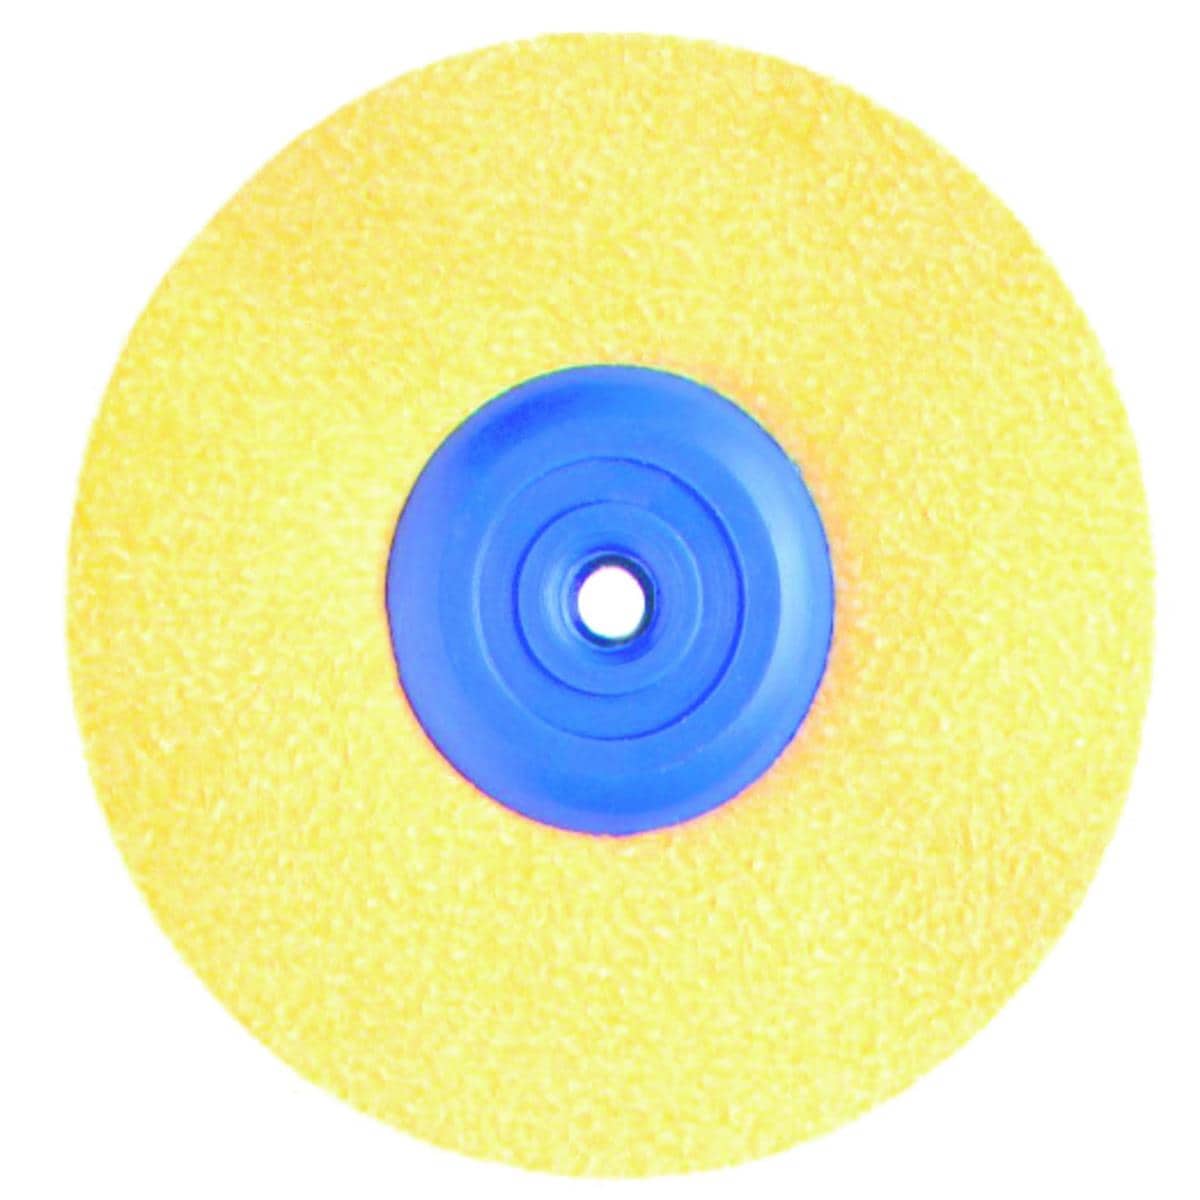 Brossettes Acrypol HATHO - Disque en chamois microfibres - 7 rangs - diam. 100 mm